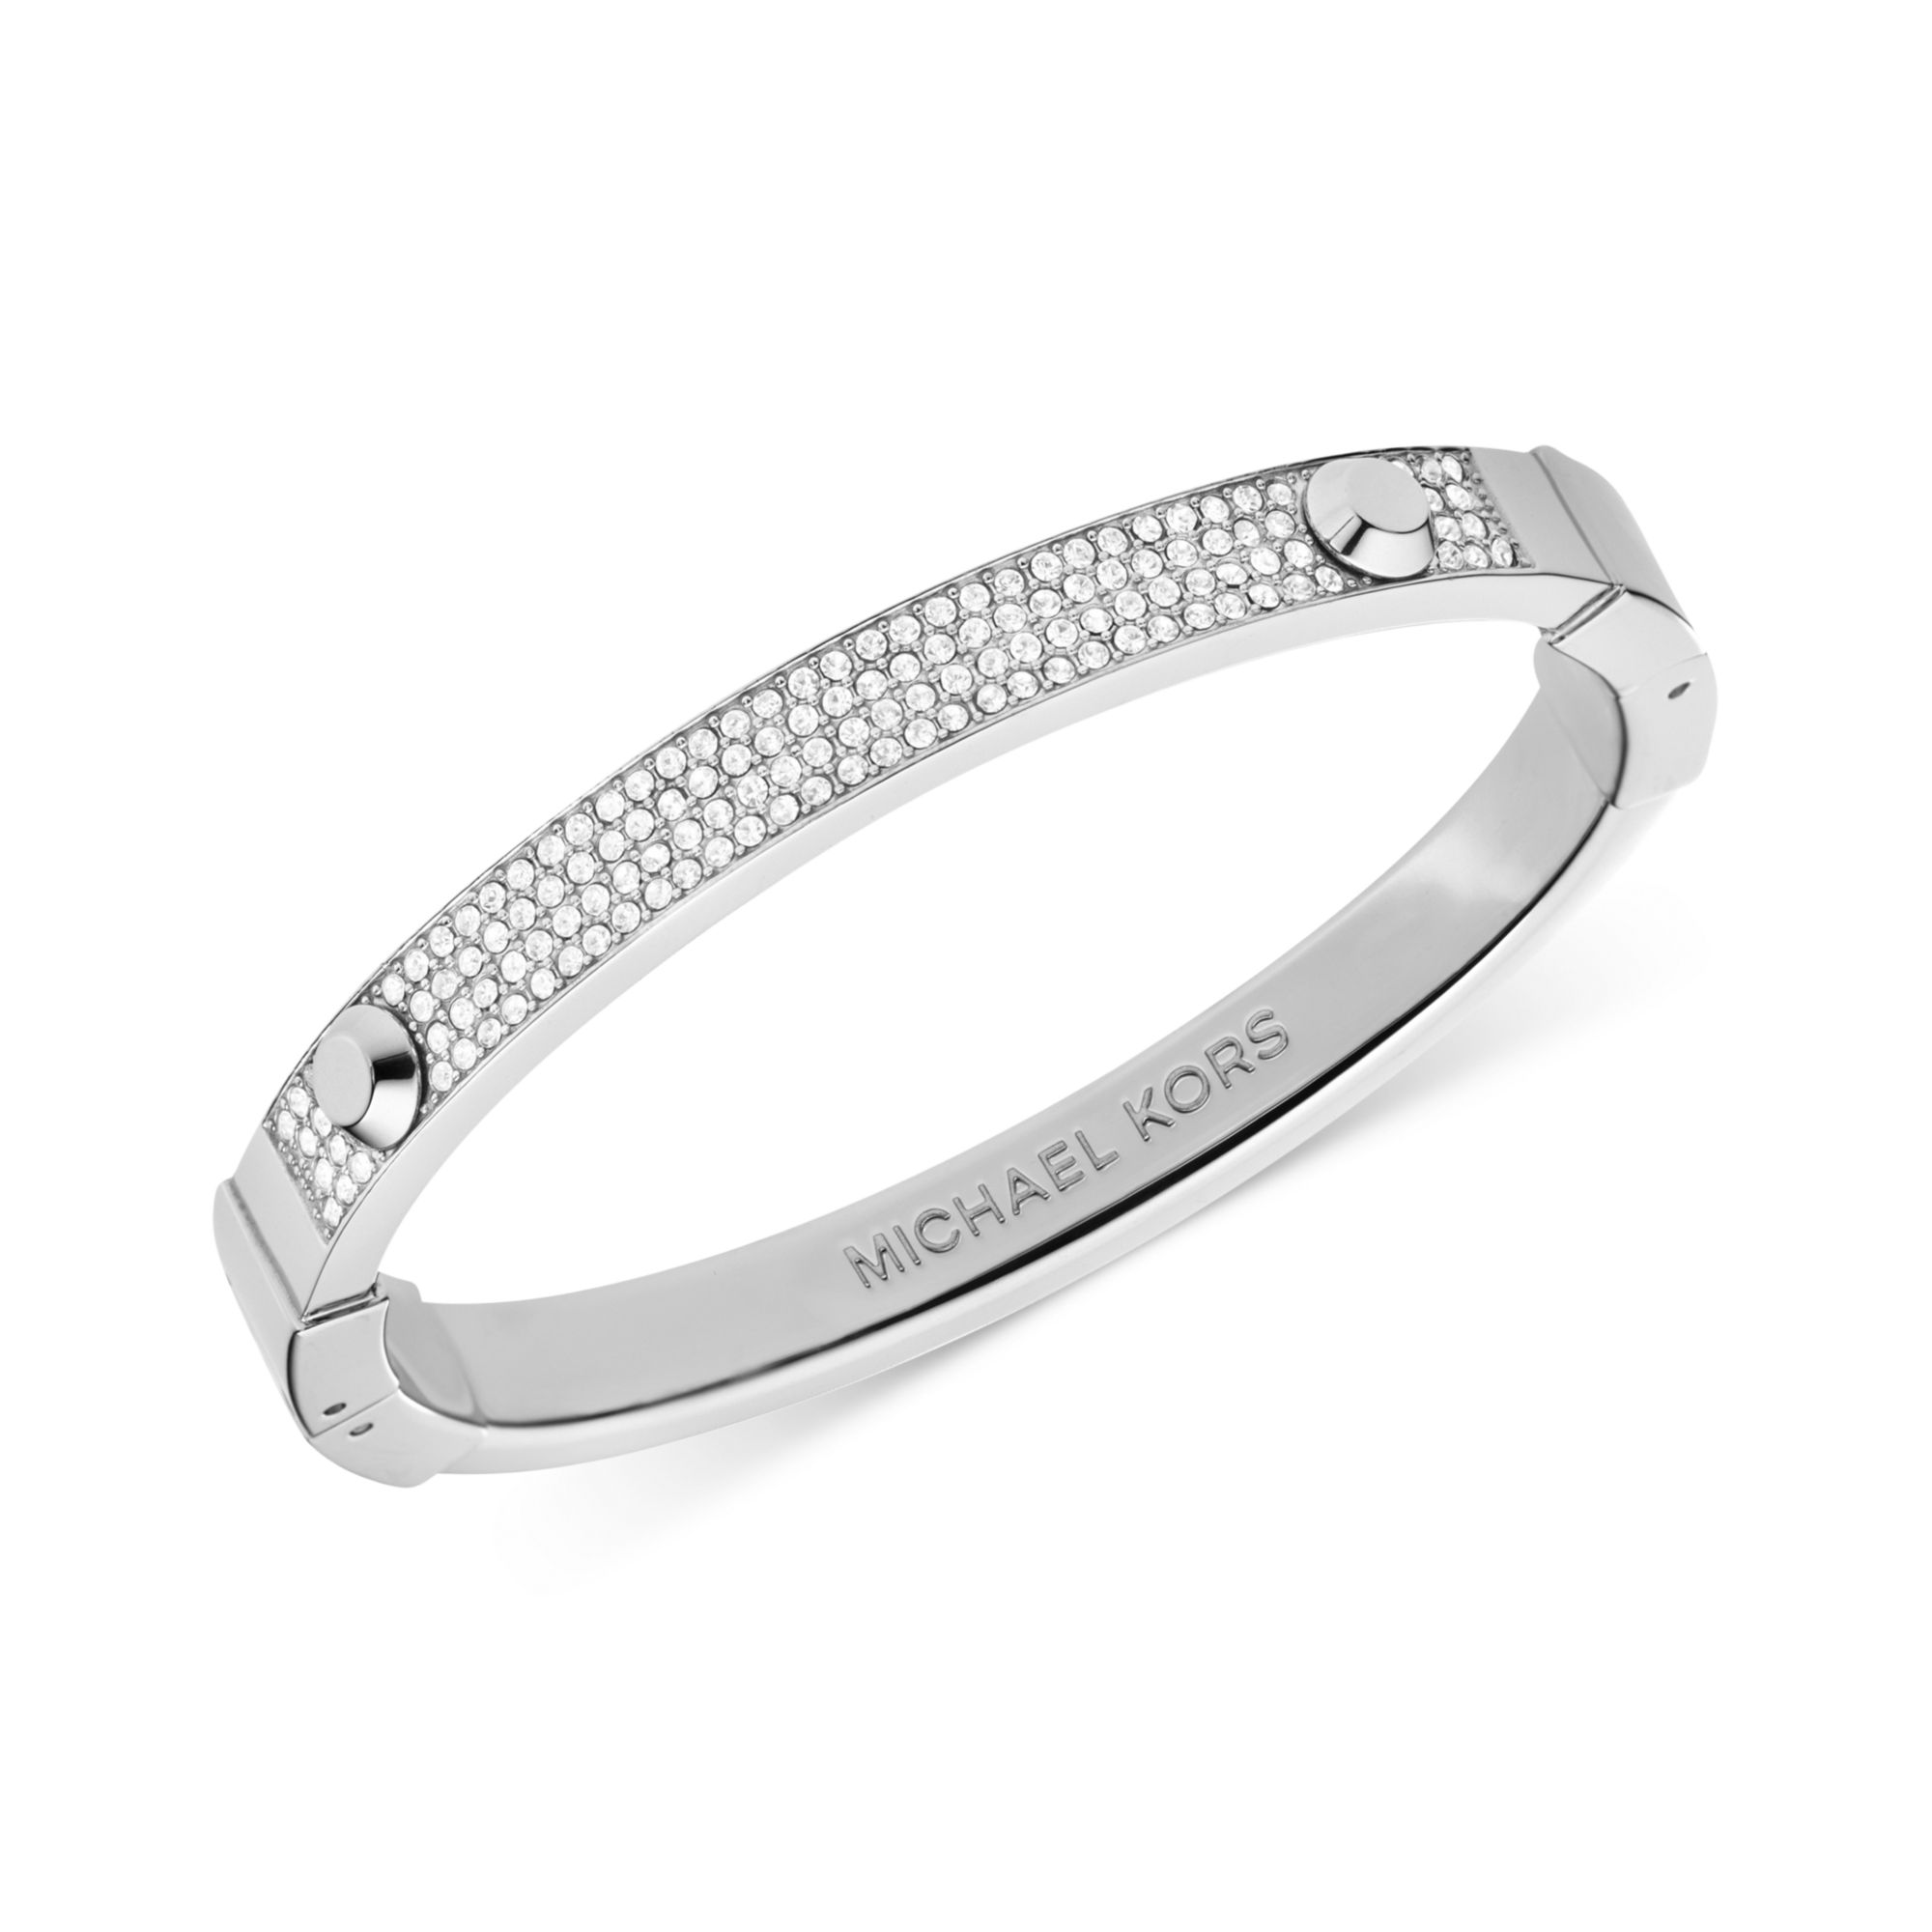 Michael Kors Silver-Tone Pave Crystal Hinge Bangle Bracelet in Silver ...